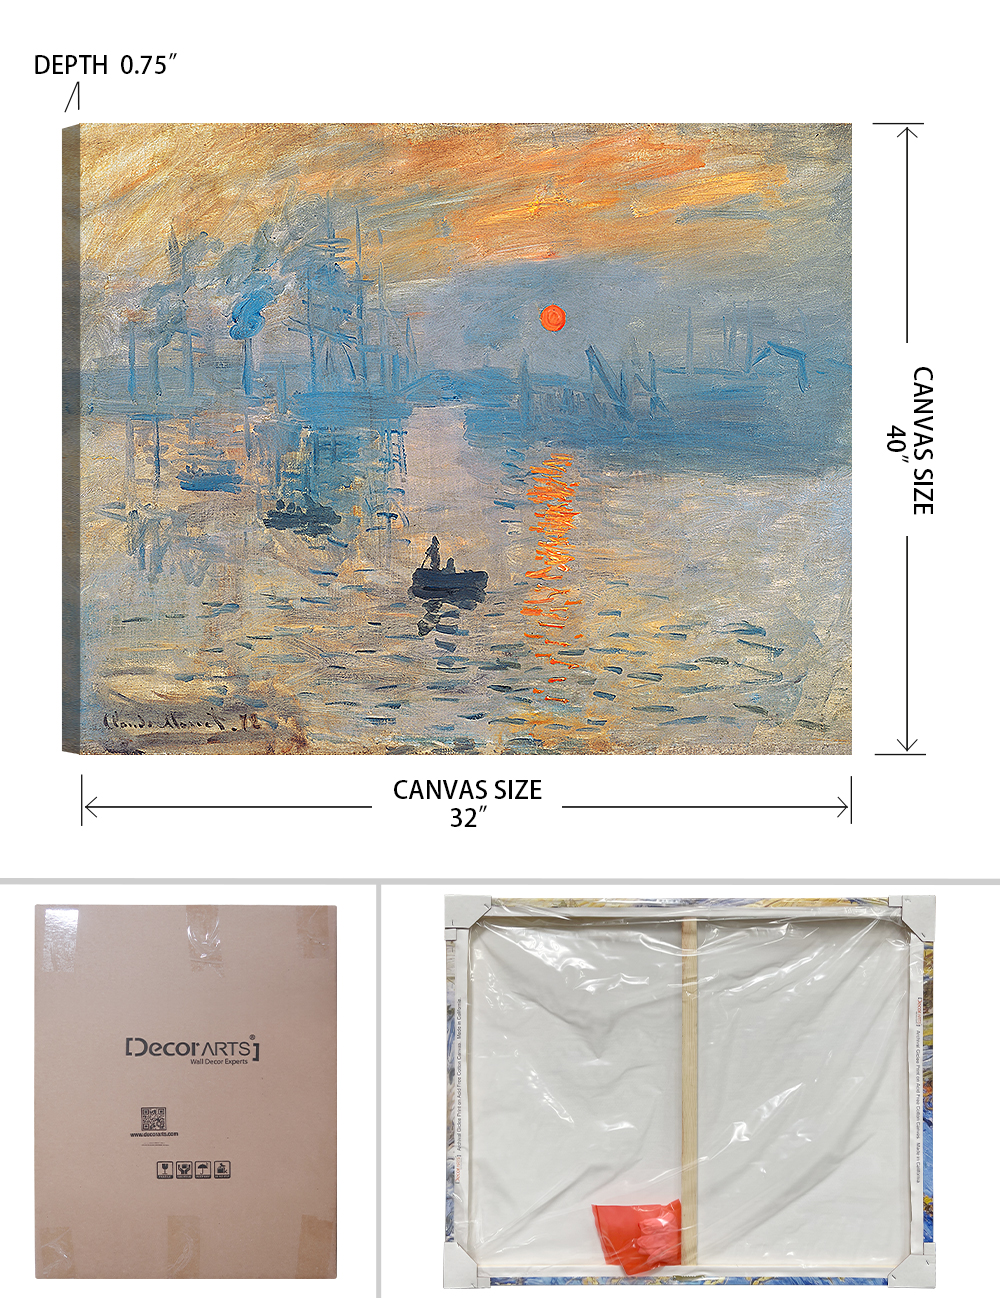 DECORARTS Impression Sunrise by Claude Monet Art Reproduction. Giclee  Prints Acid Free Cotton Canvas Wall Art for Home Decor W 40